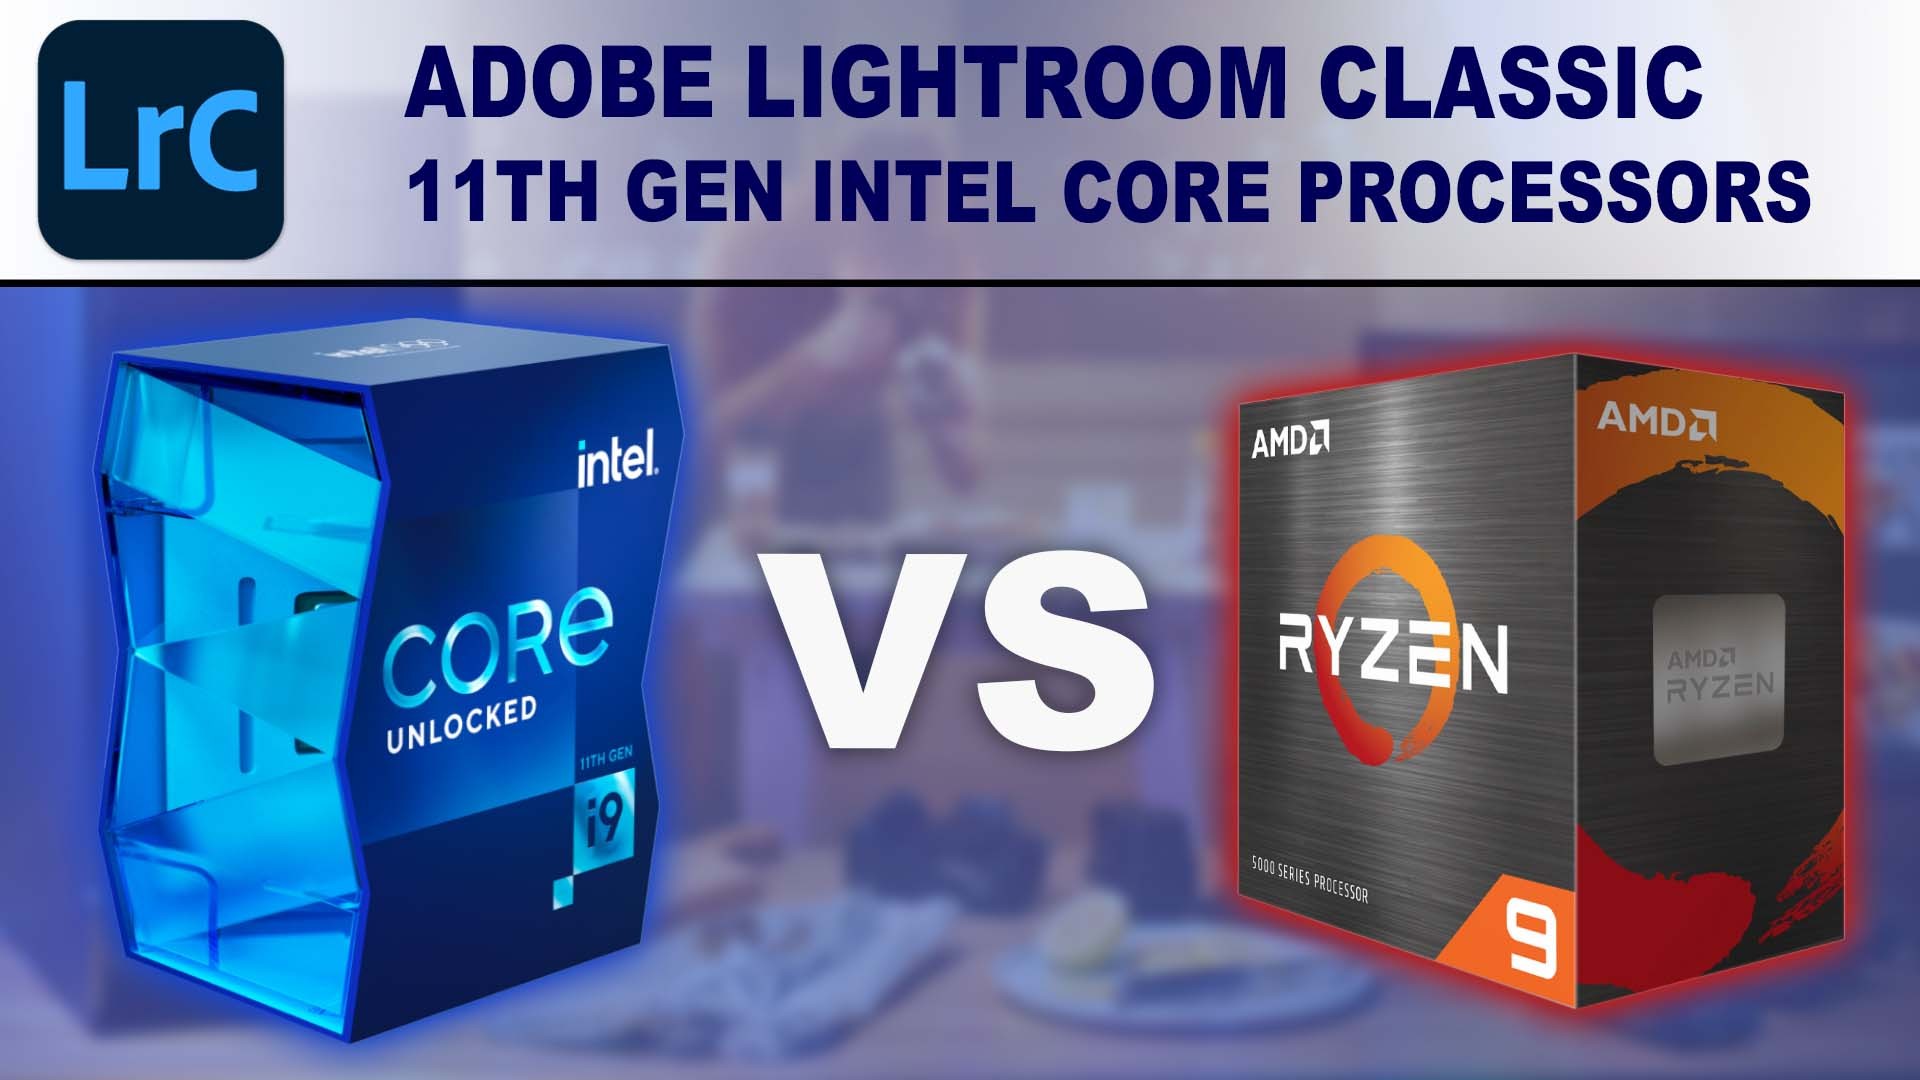 11th Gen Intel Core Processors for Adobe Lightroom Classic